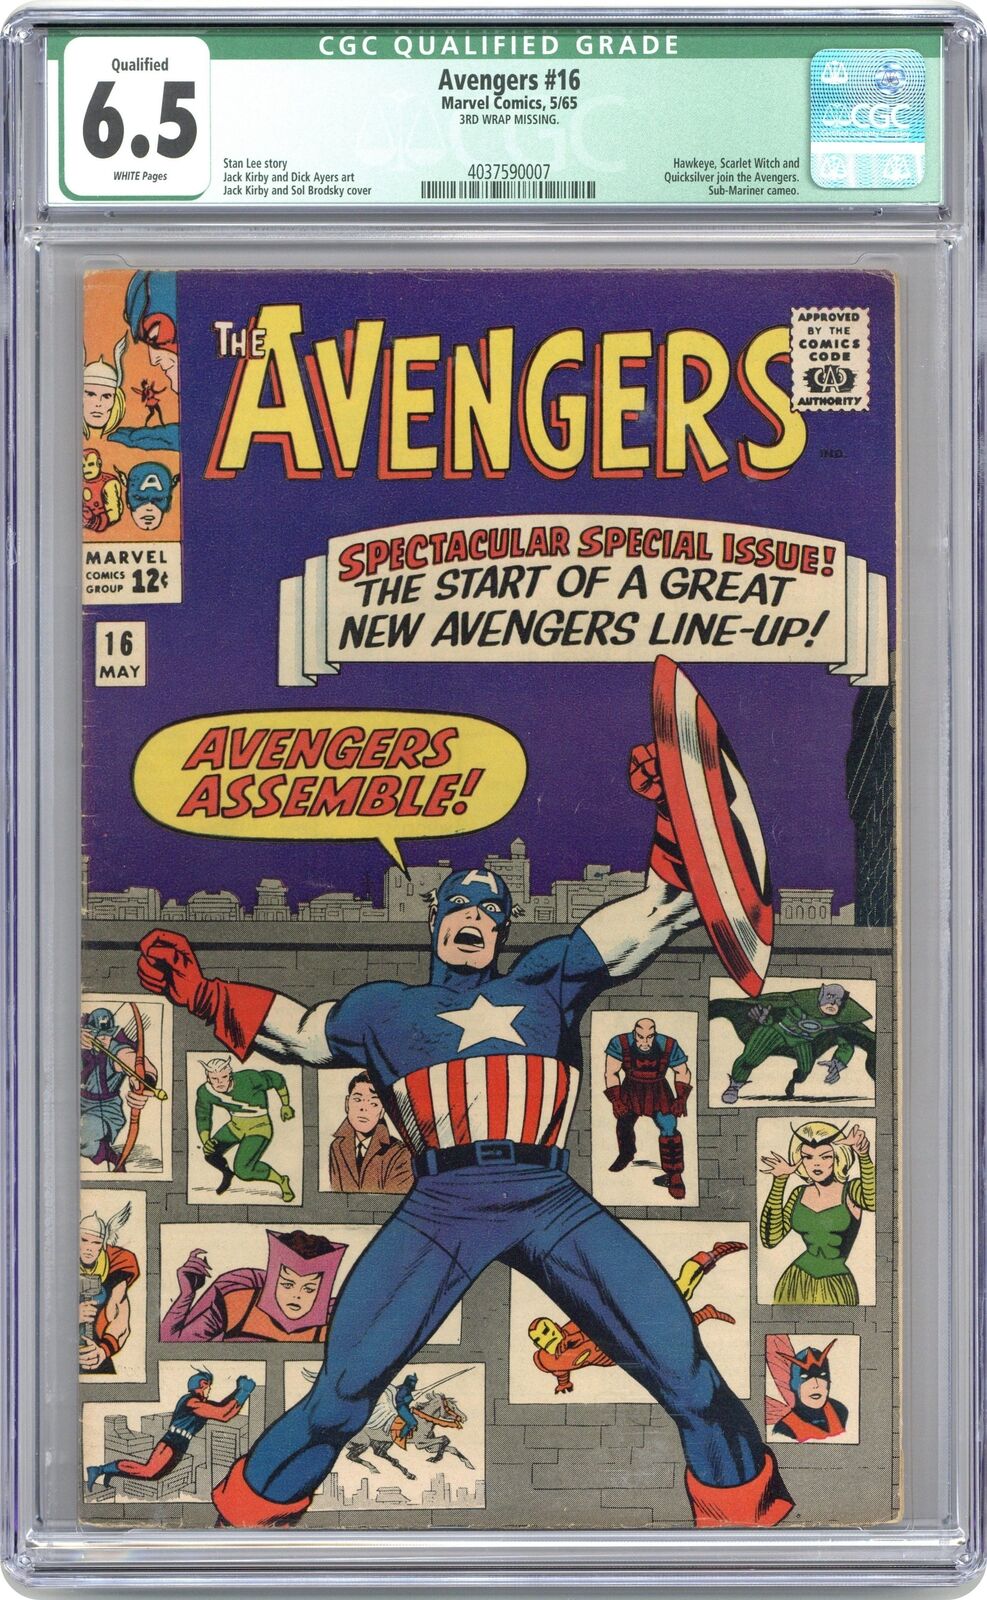 Avengers #16 CGC 6.5 QUALIFIED 1965 4037590007